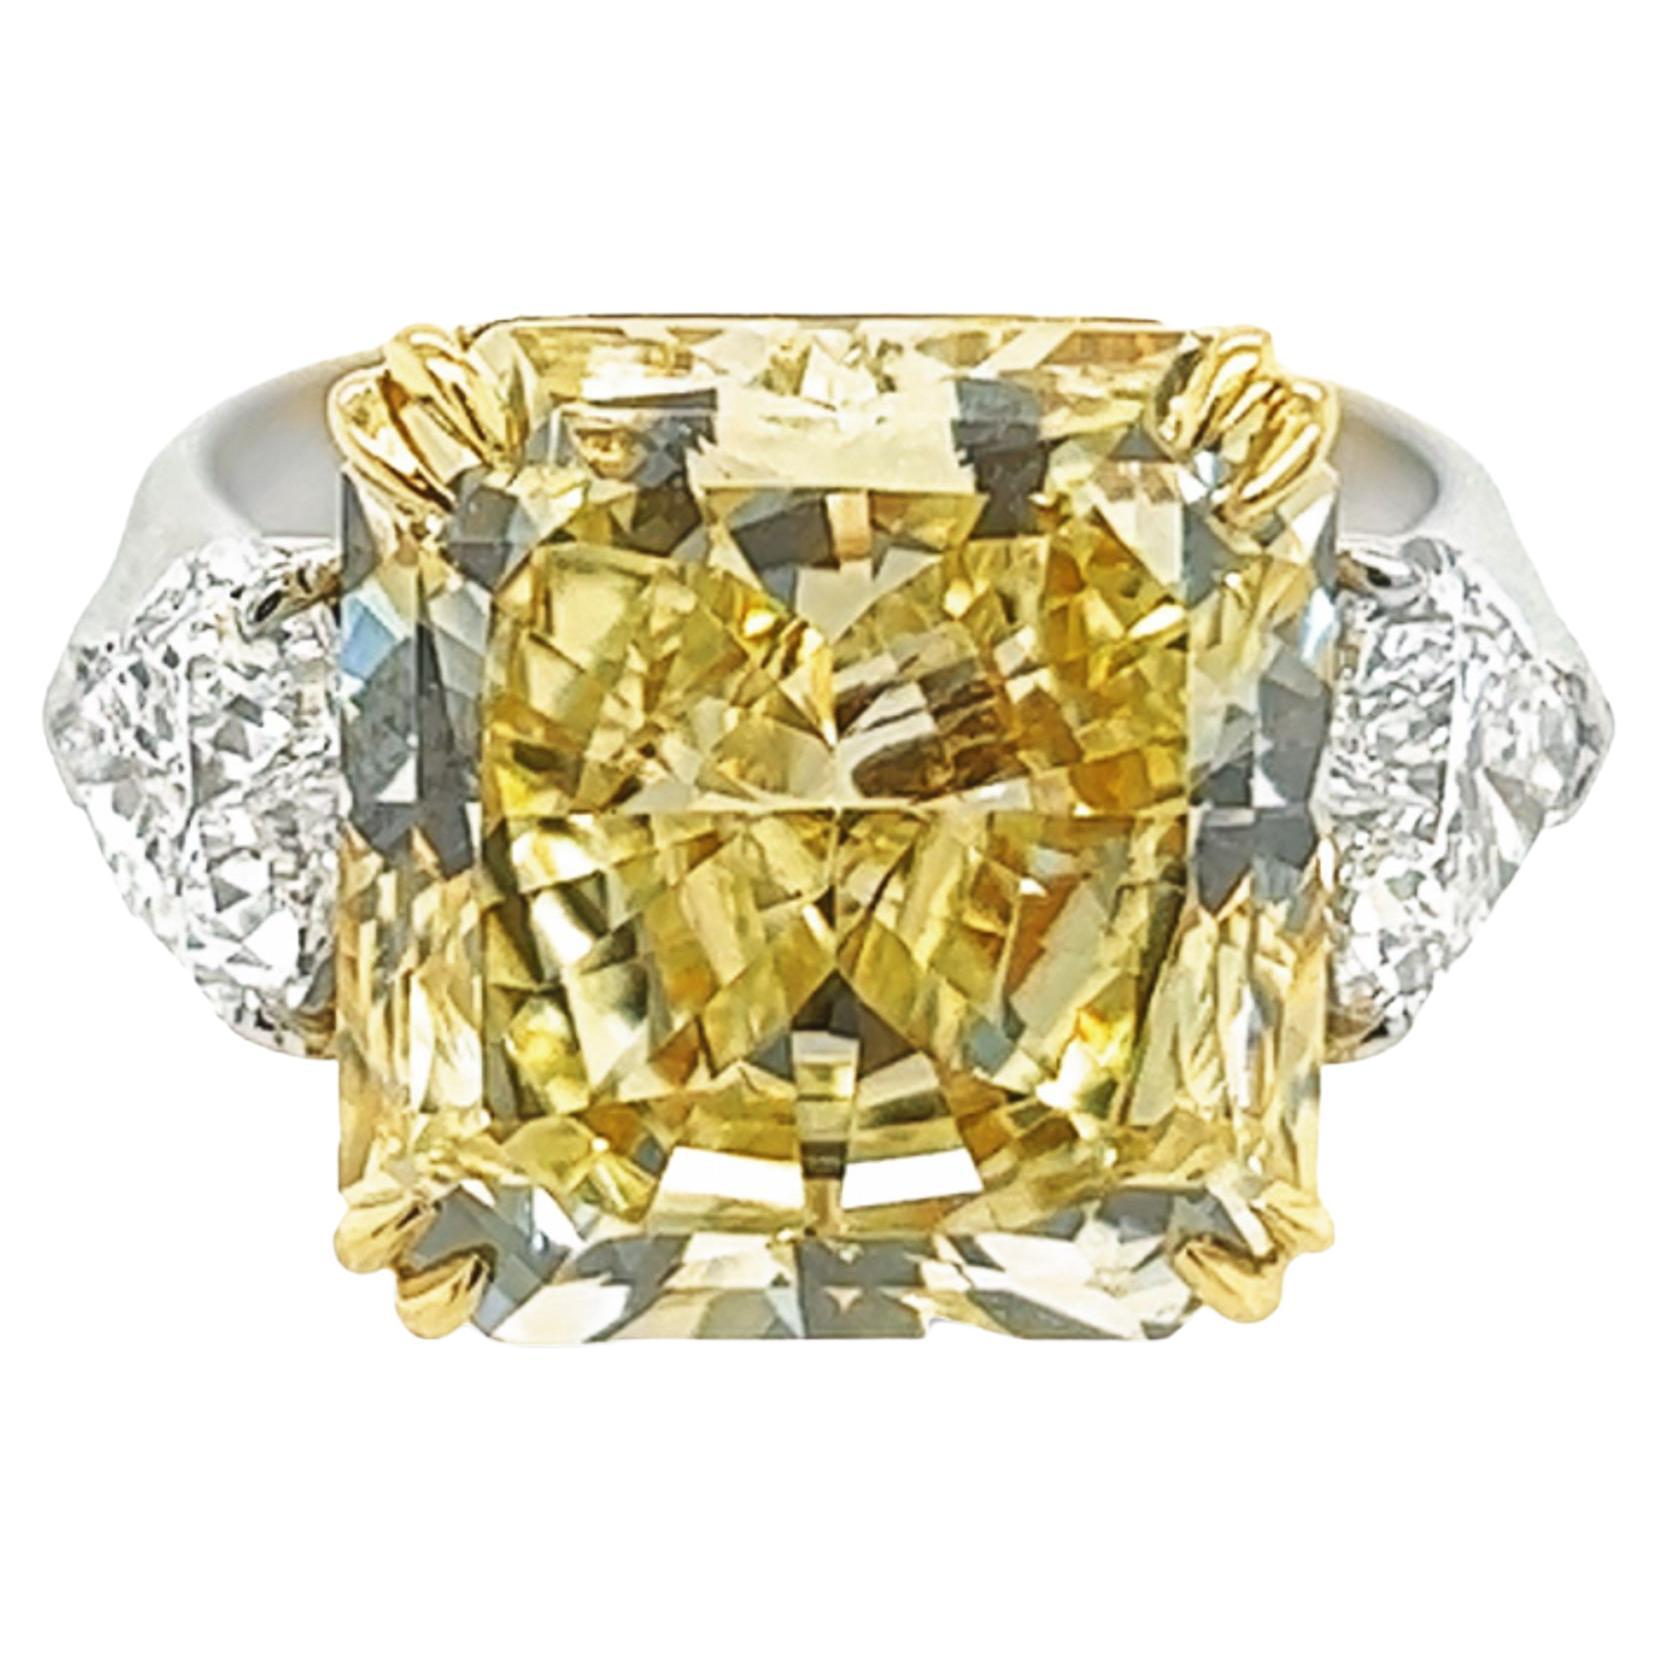 David Rosenberg Verlobungsring mit 10,23 strahlendem gelbem VVS1 GIA-Diamant